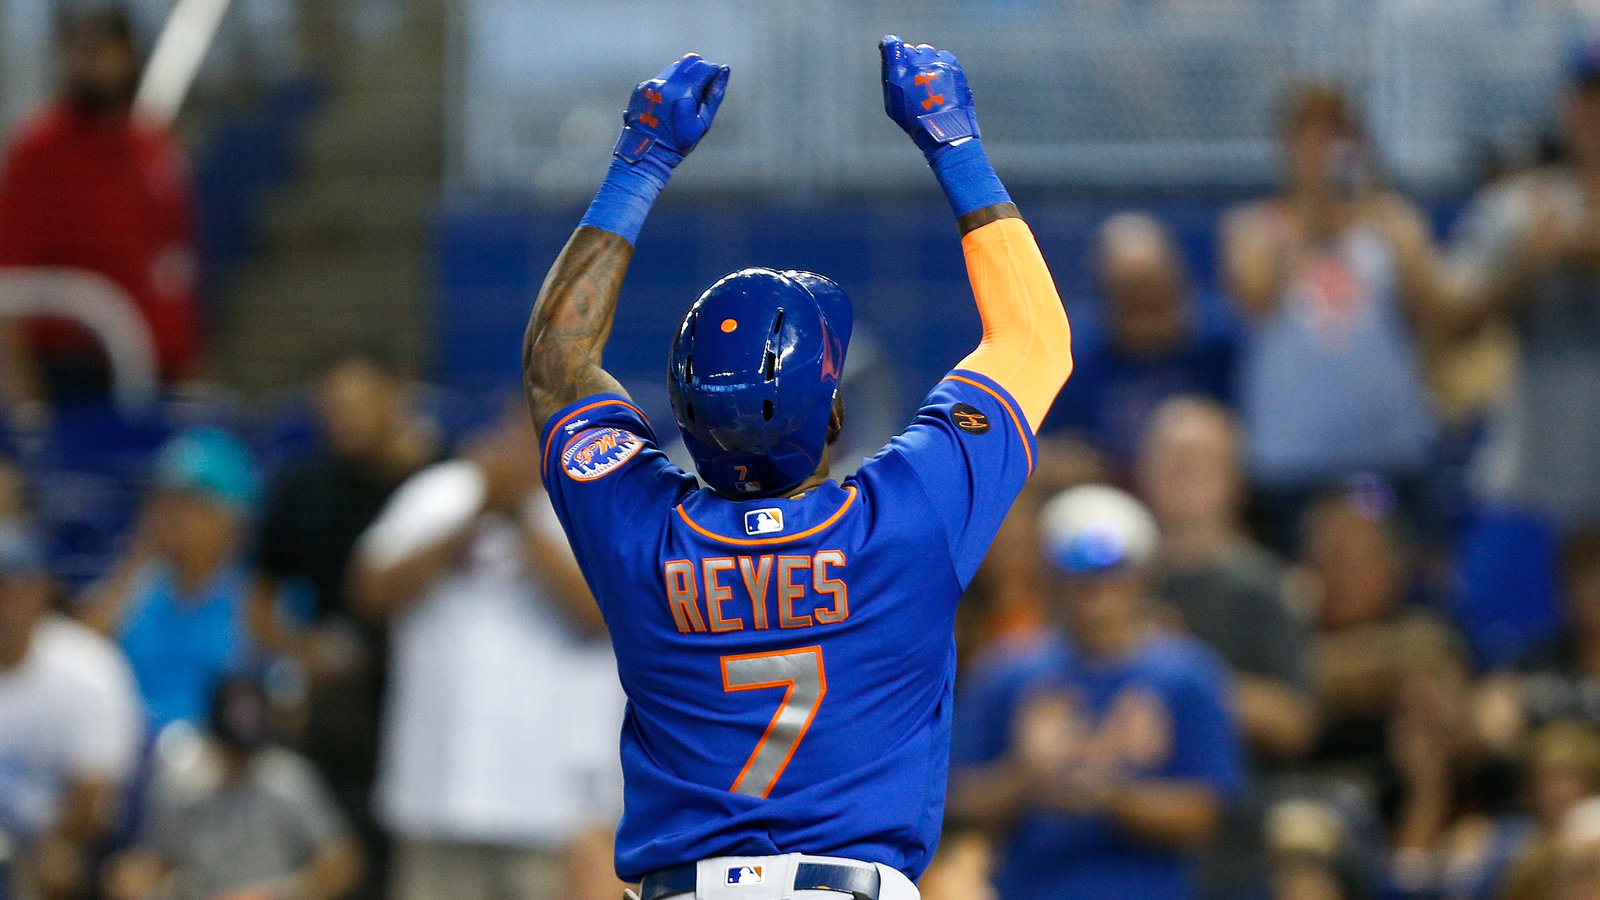 Jose Reyes, of All People, Powers the Mets